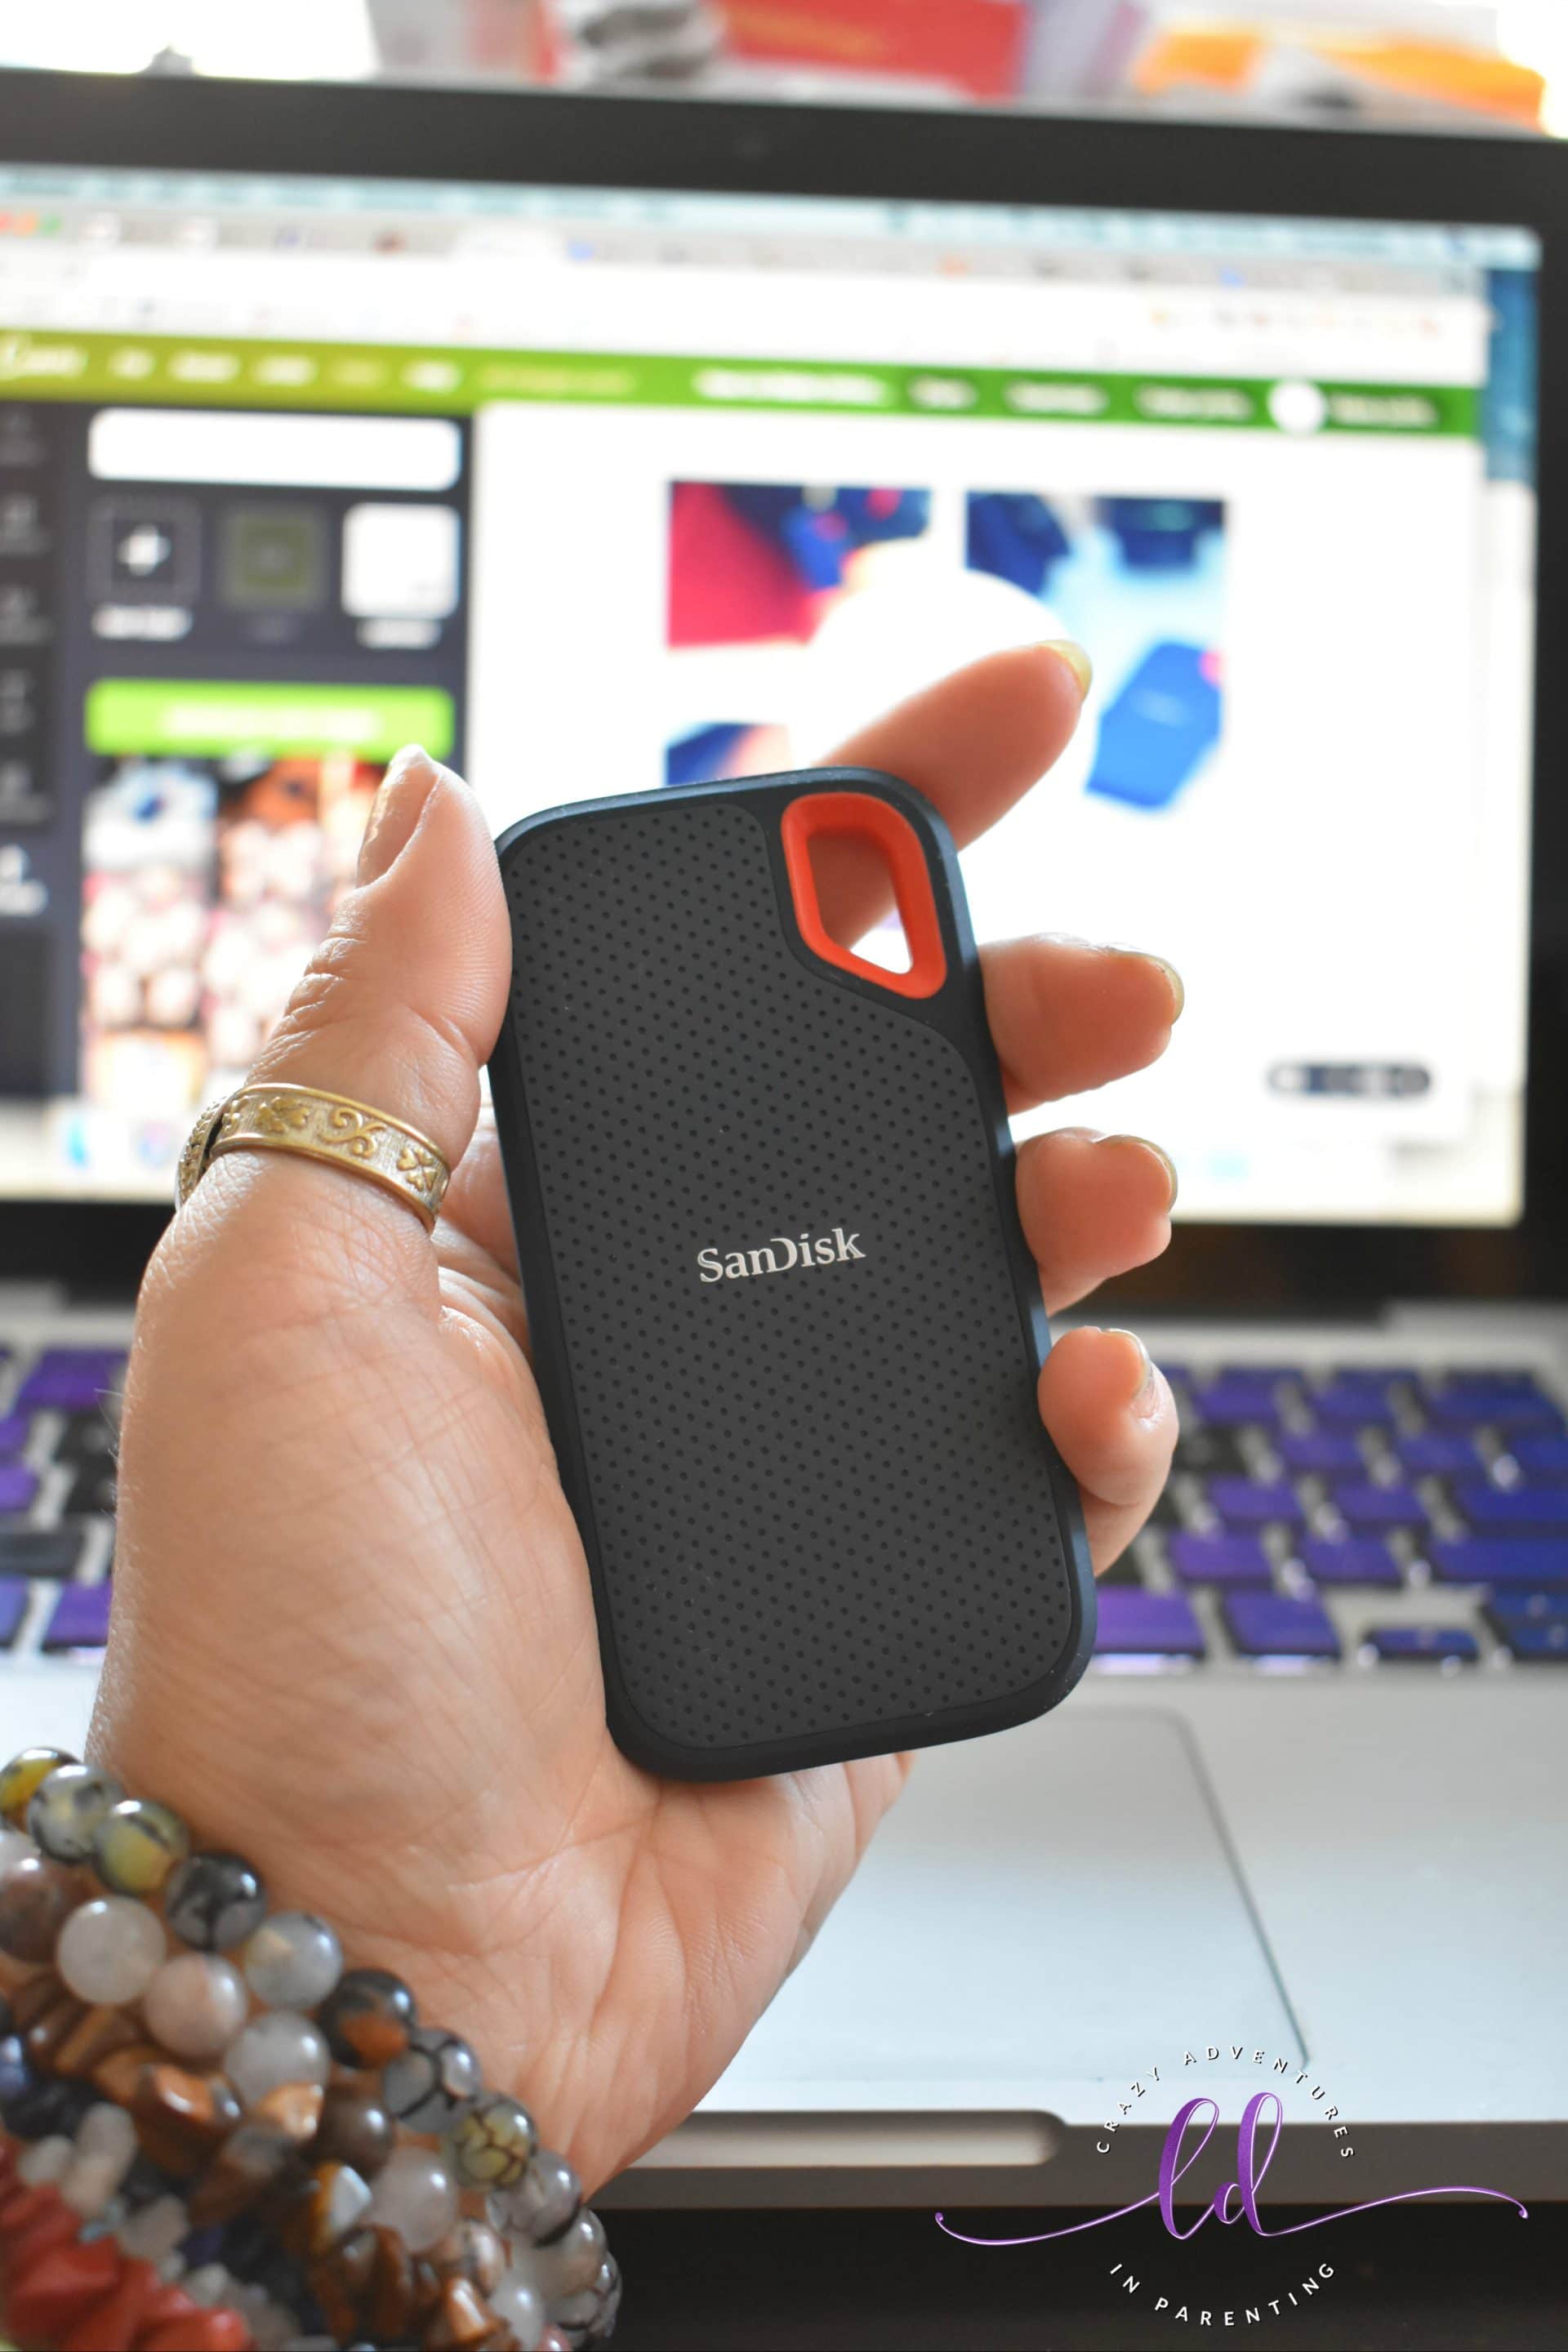 Sandisk Extreme portable storage